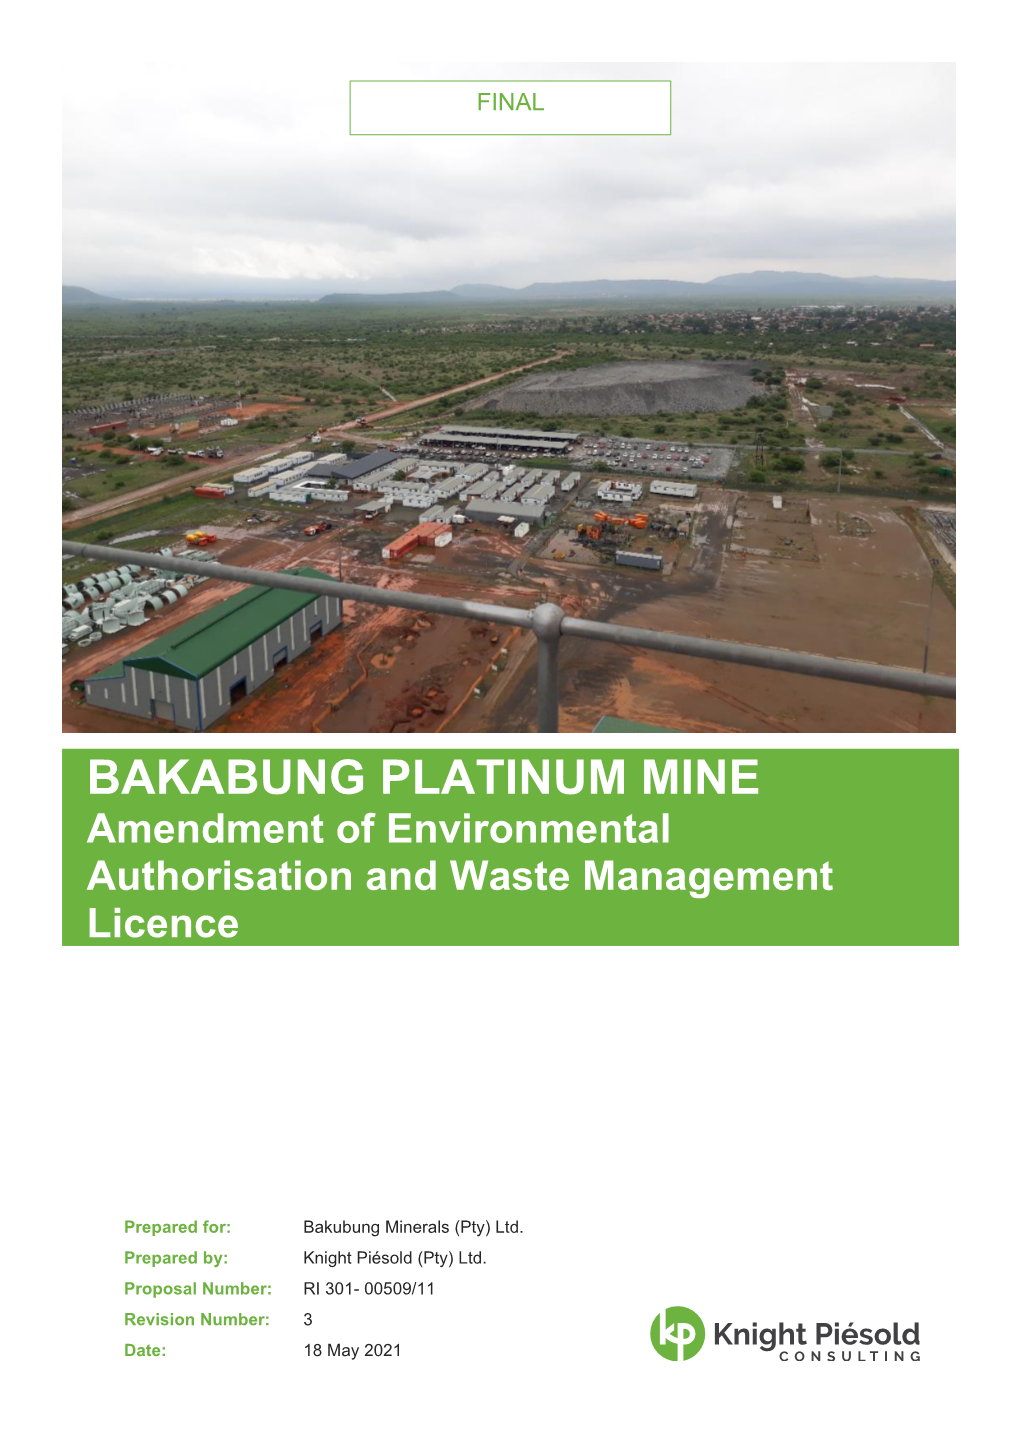 BAKABUNG PLATINUM MINE Amendment of Environmental Authorisation and Waste Management Licence